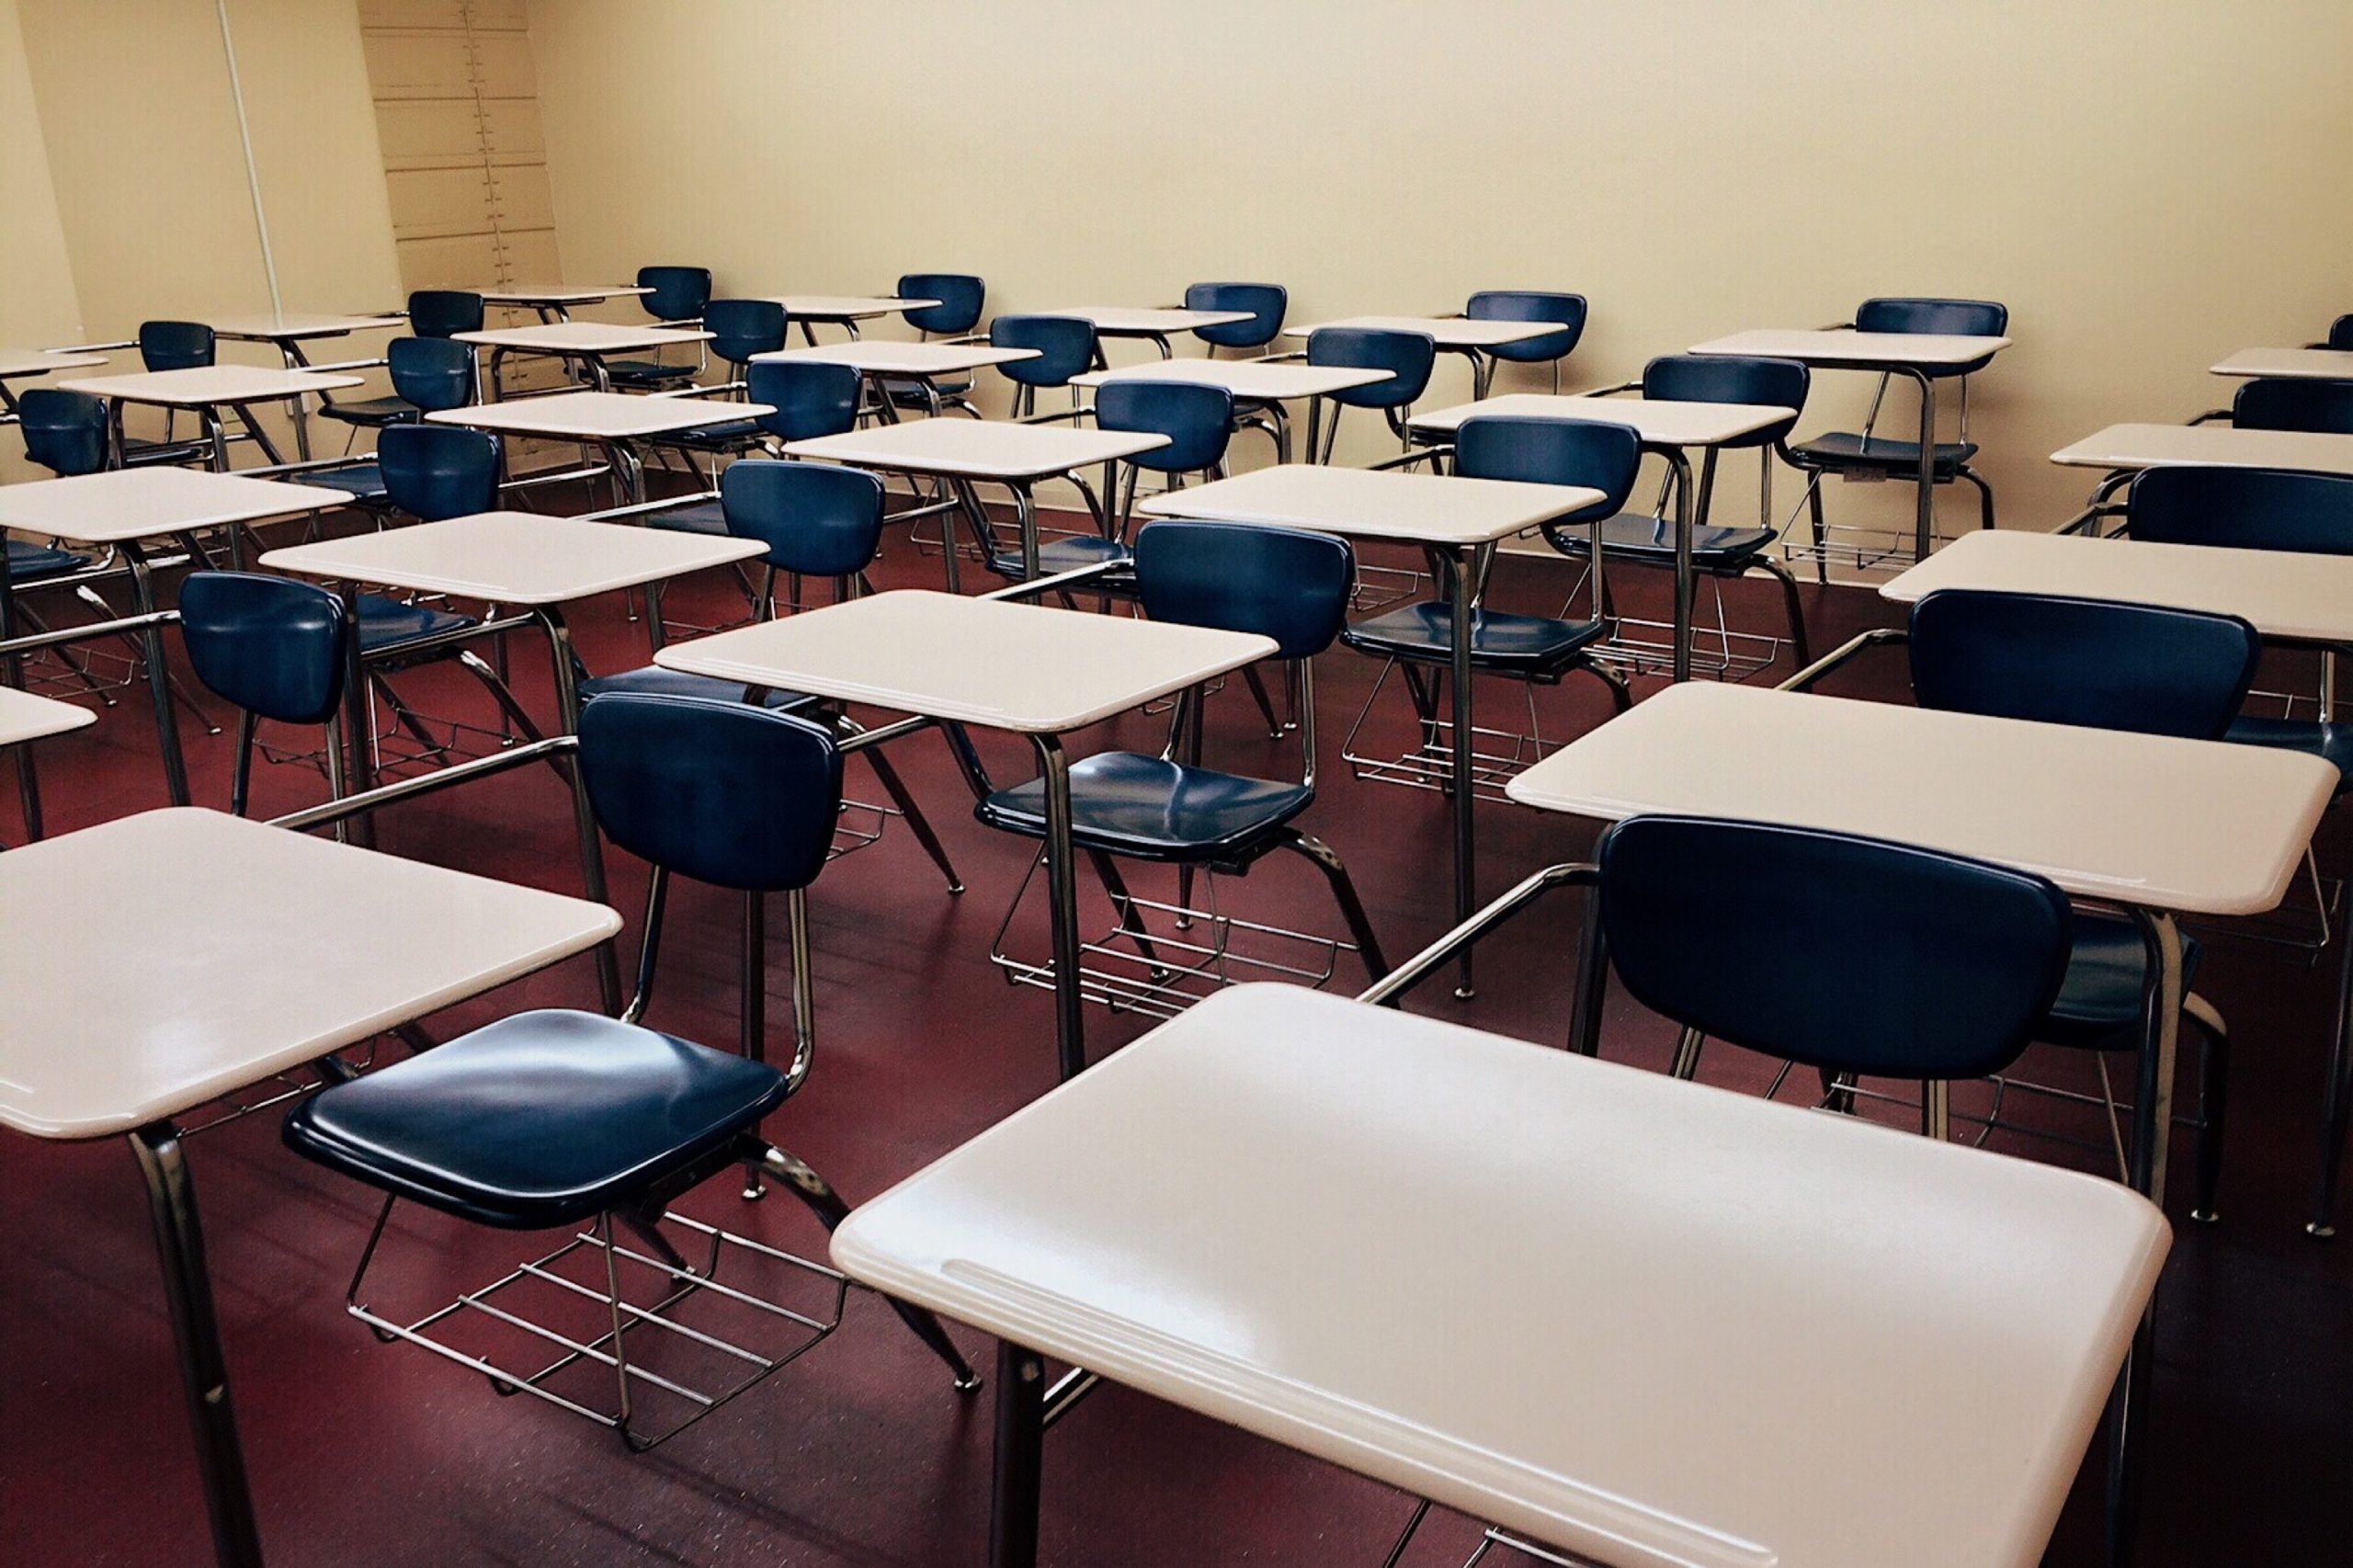 Image of a school classroom full of desks